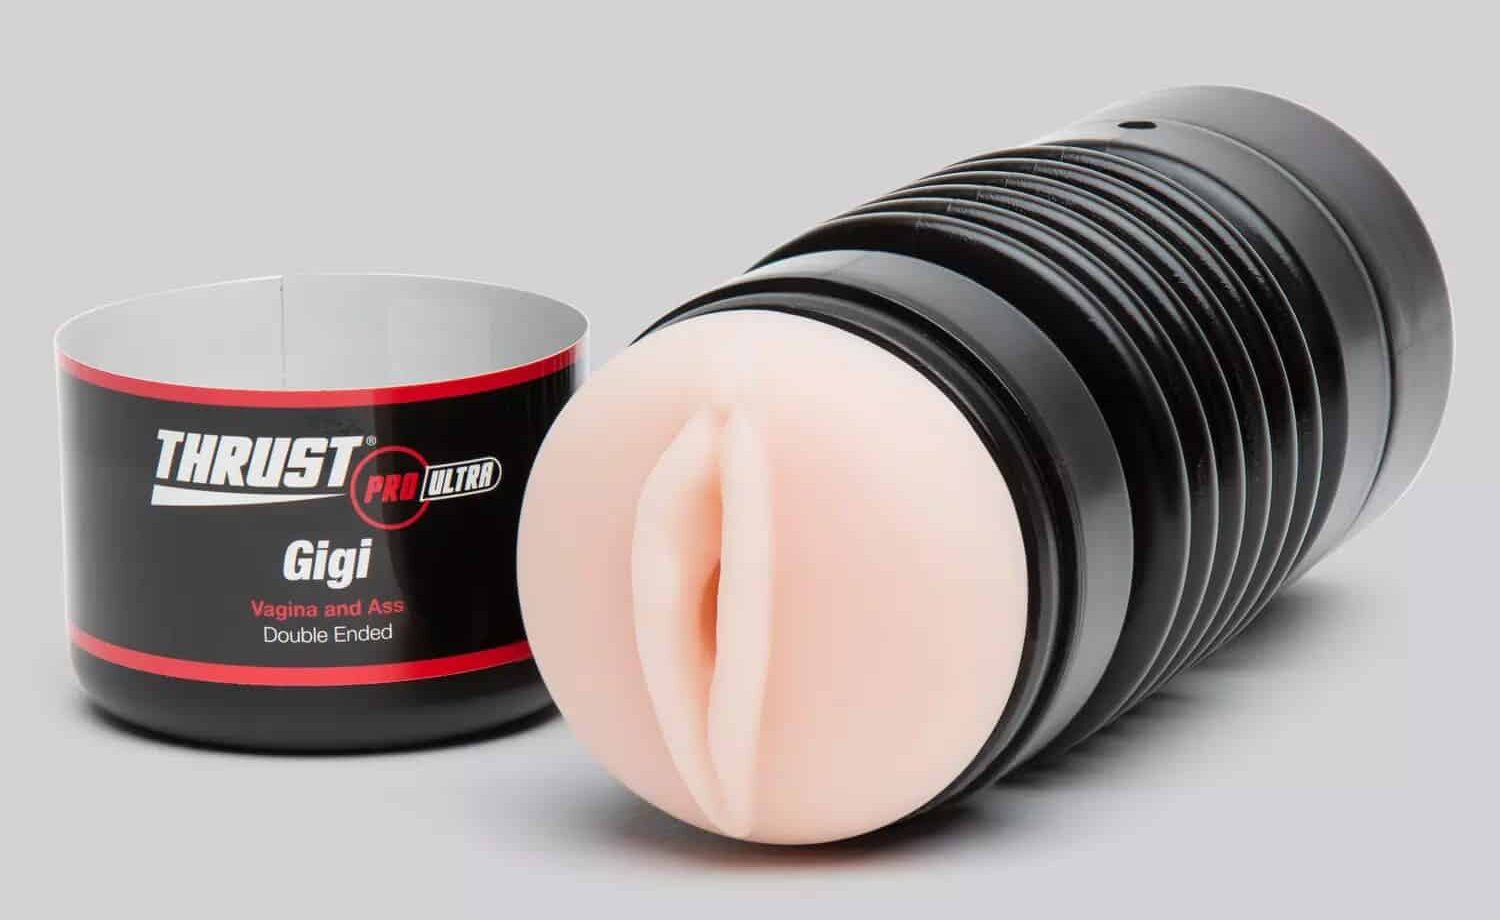 THRUST Pro Ultra Gigi Realistic Vagina and Ass. Slide 6